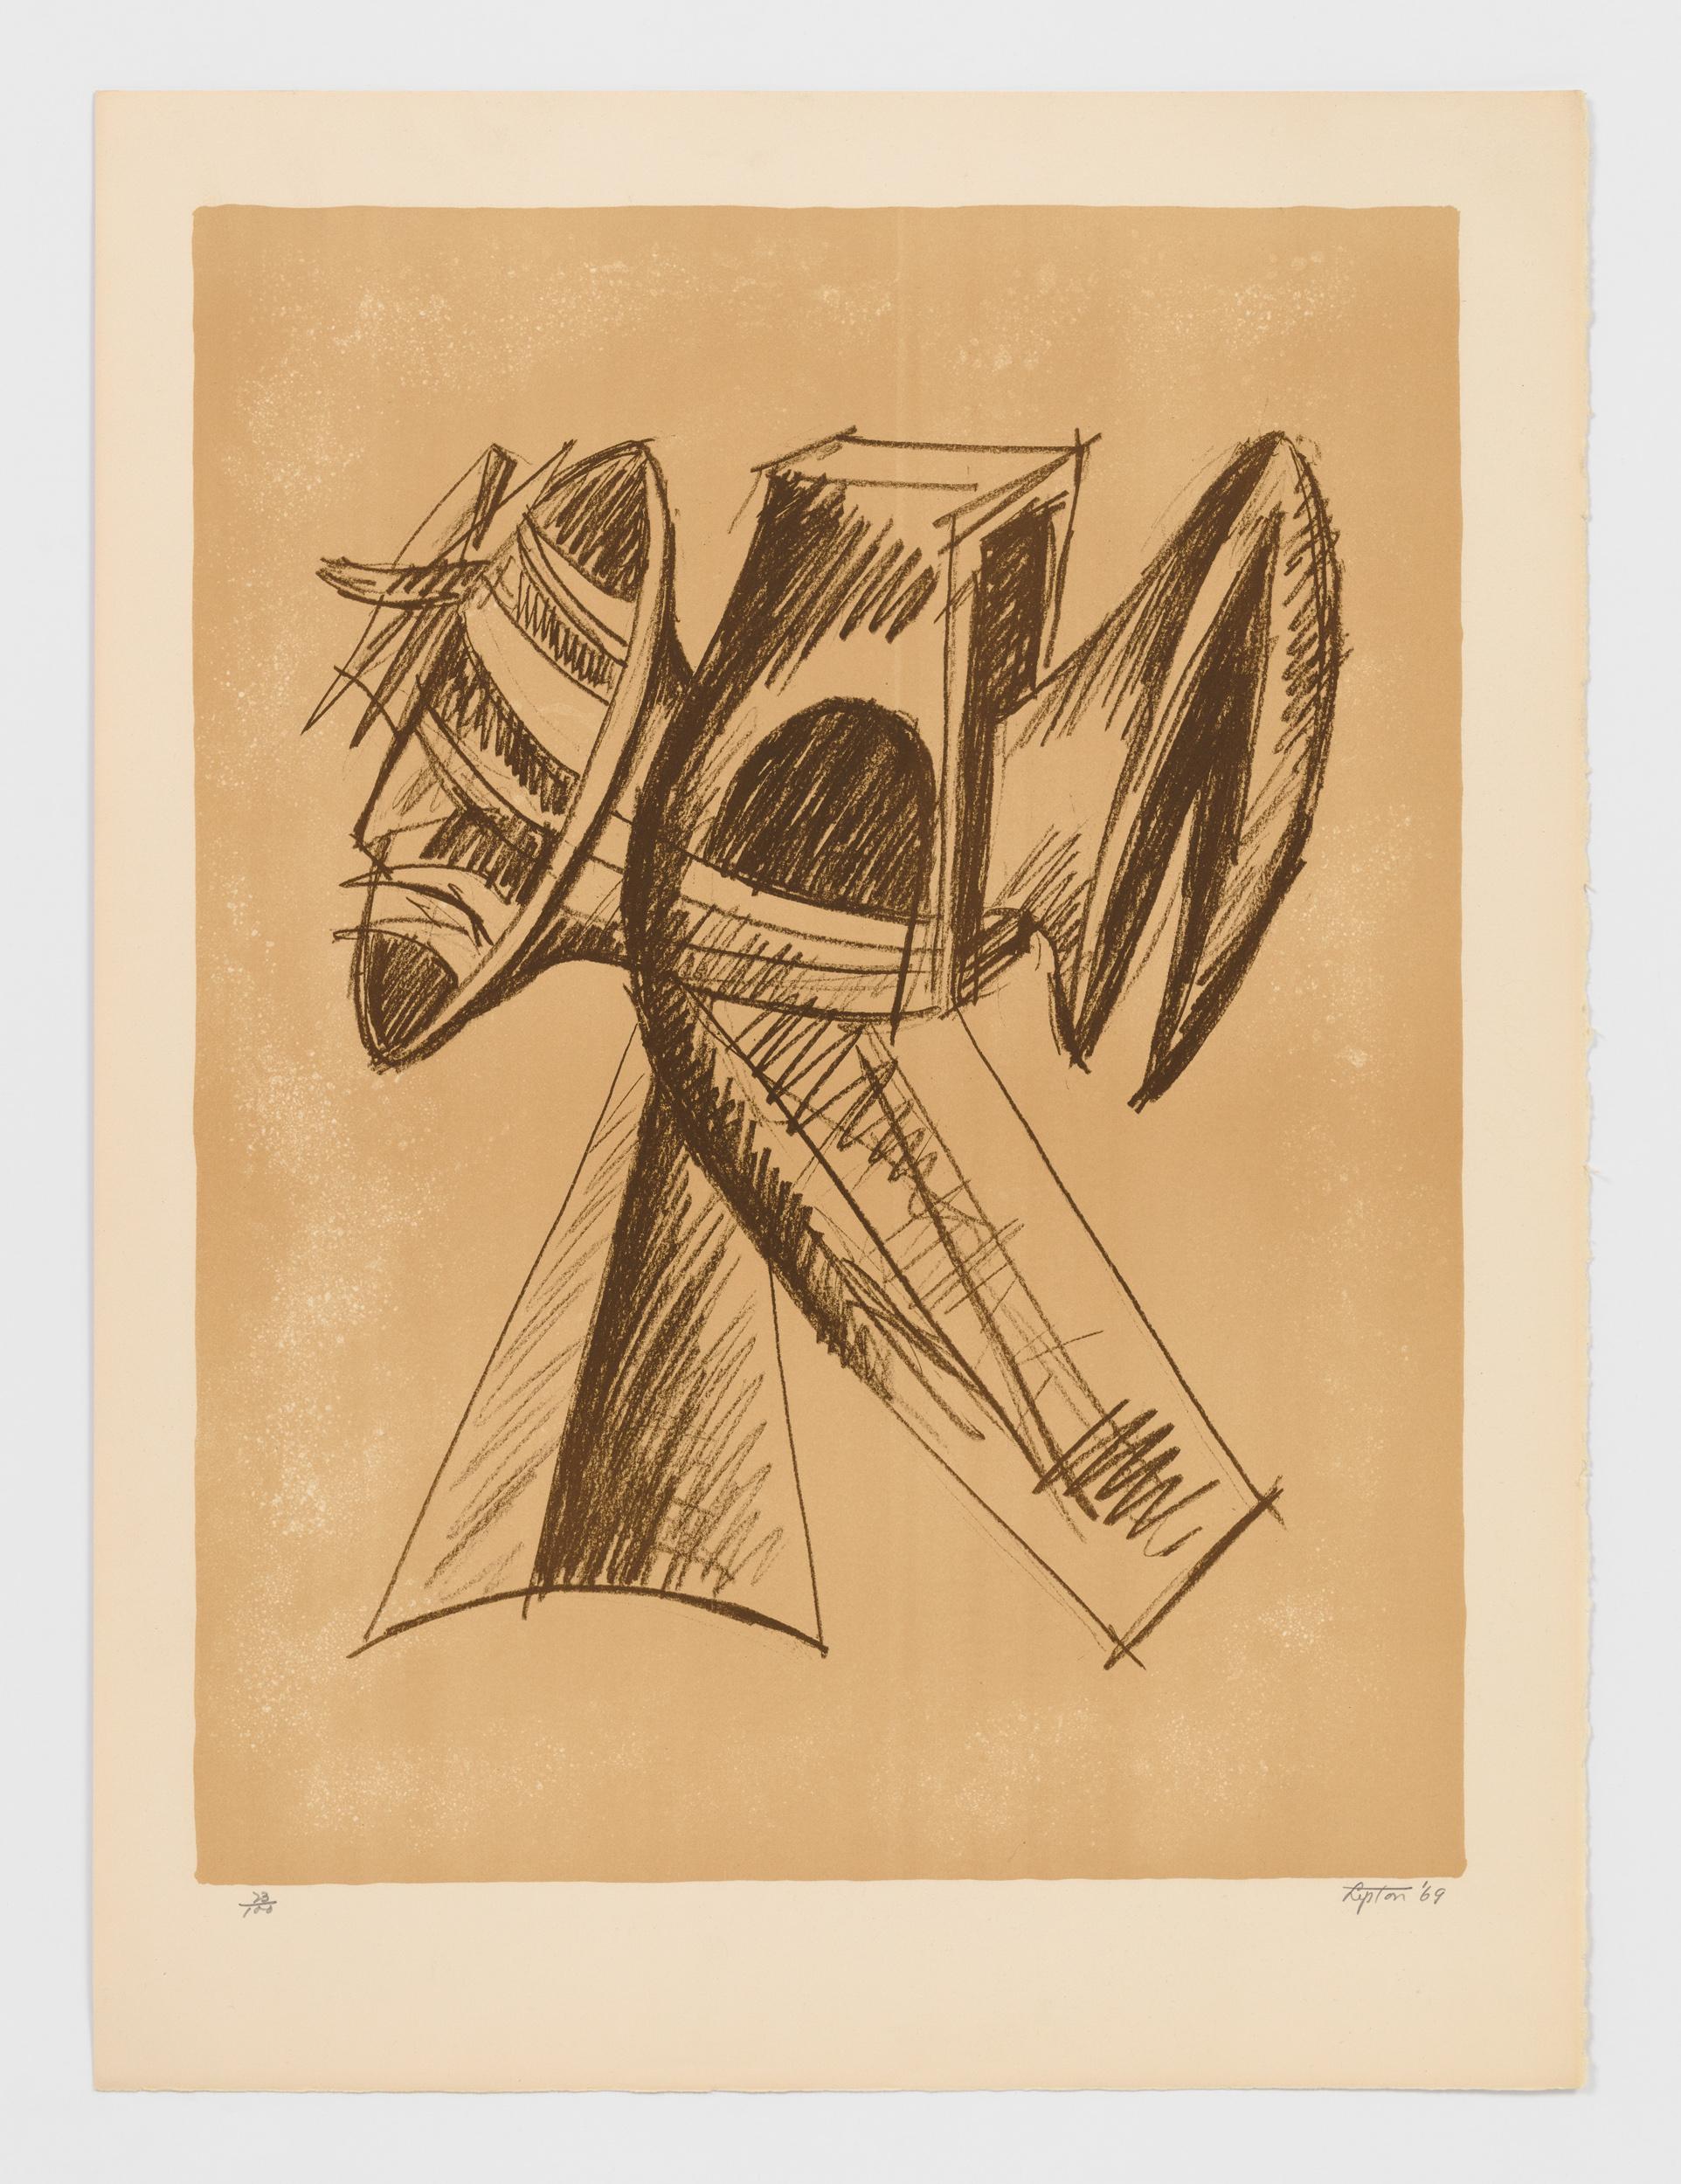 Seymour Lipton Abstract Print - Study for Sculpture No. 1